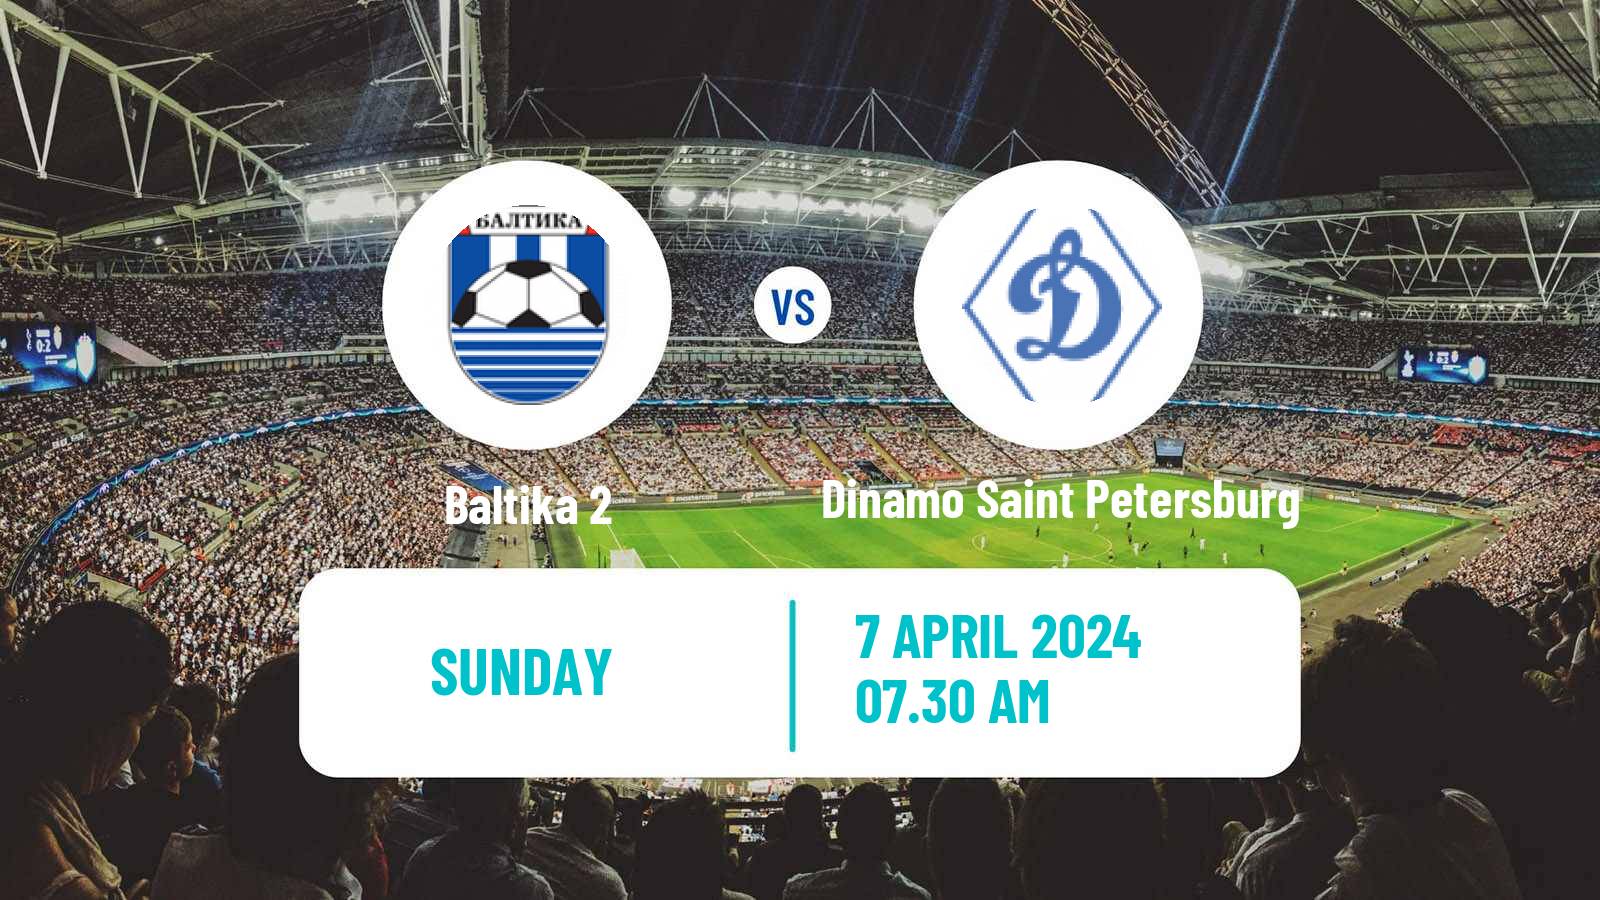 Soccer FNL 2 Division B Group 2 Baltika 2 - Dinamo Saint Petersburg